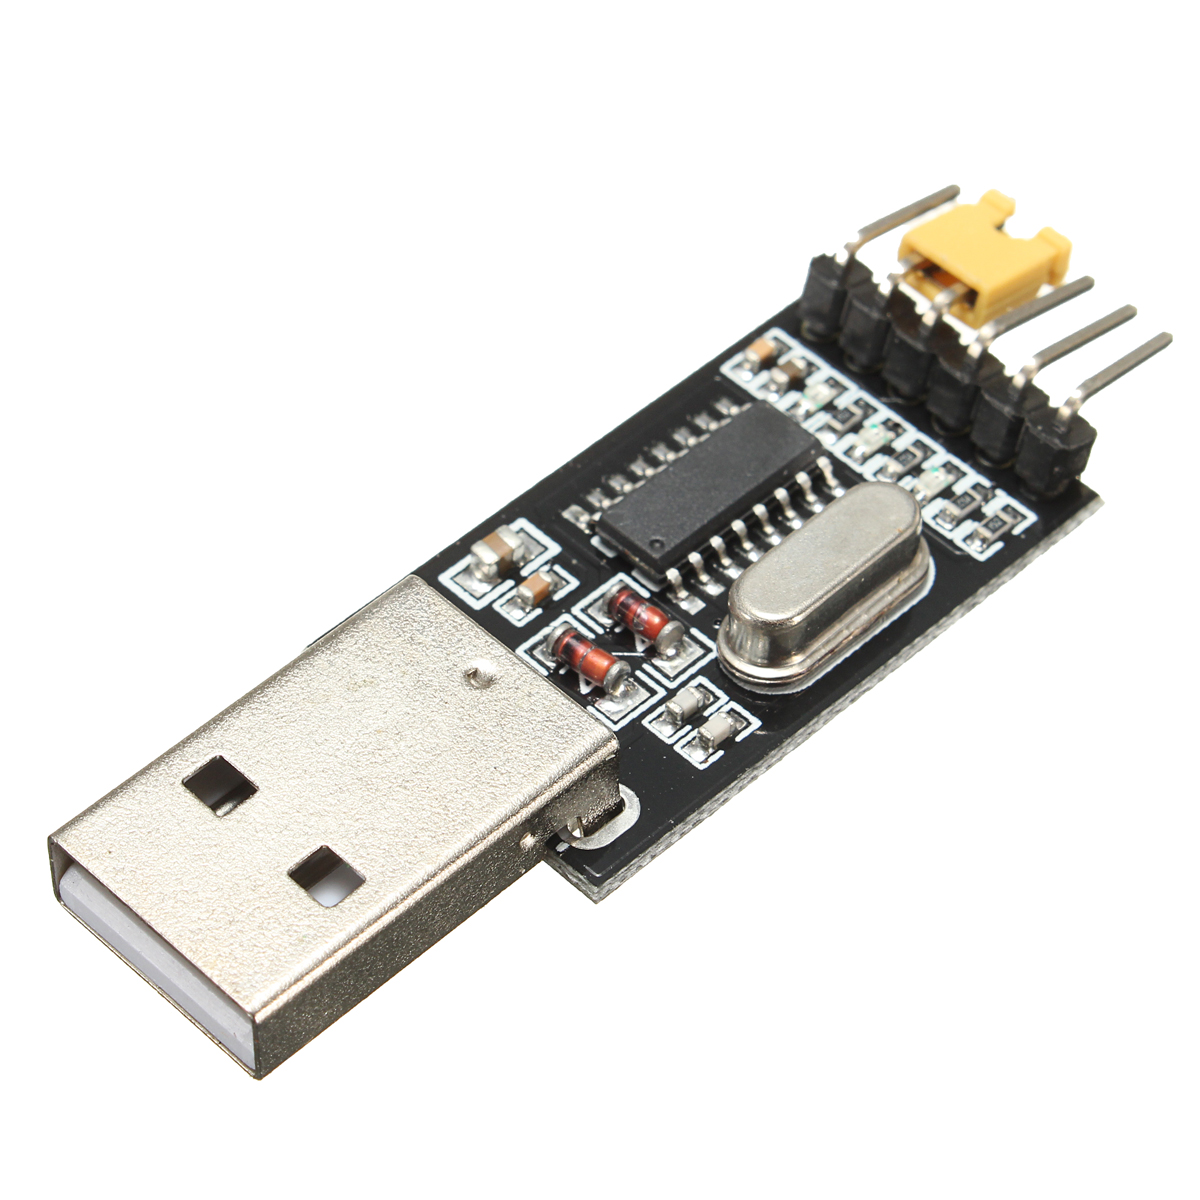 3pcs-33V-5V-USB-to-TTL-Converter-CH340G-UART-Serial-Adapter-Module-STC-1314969-1